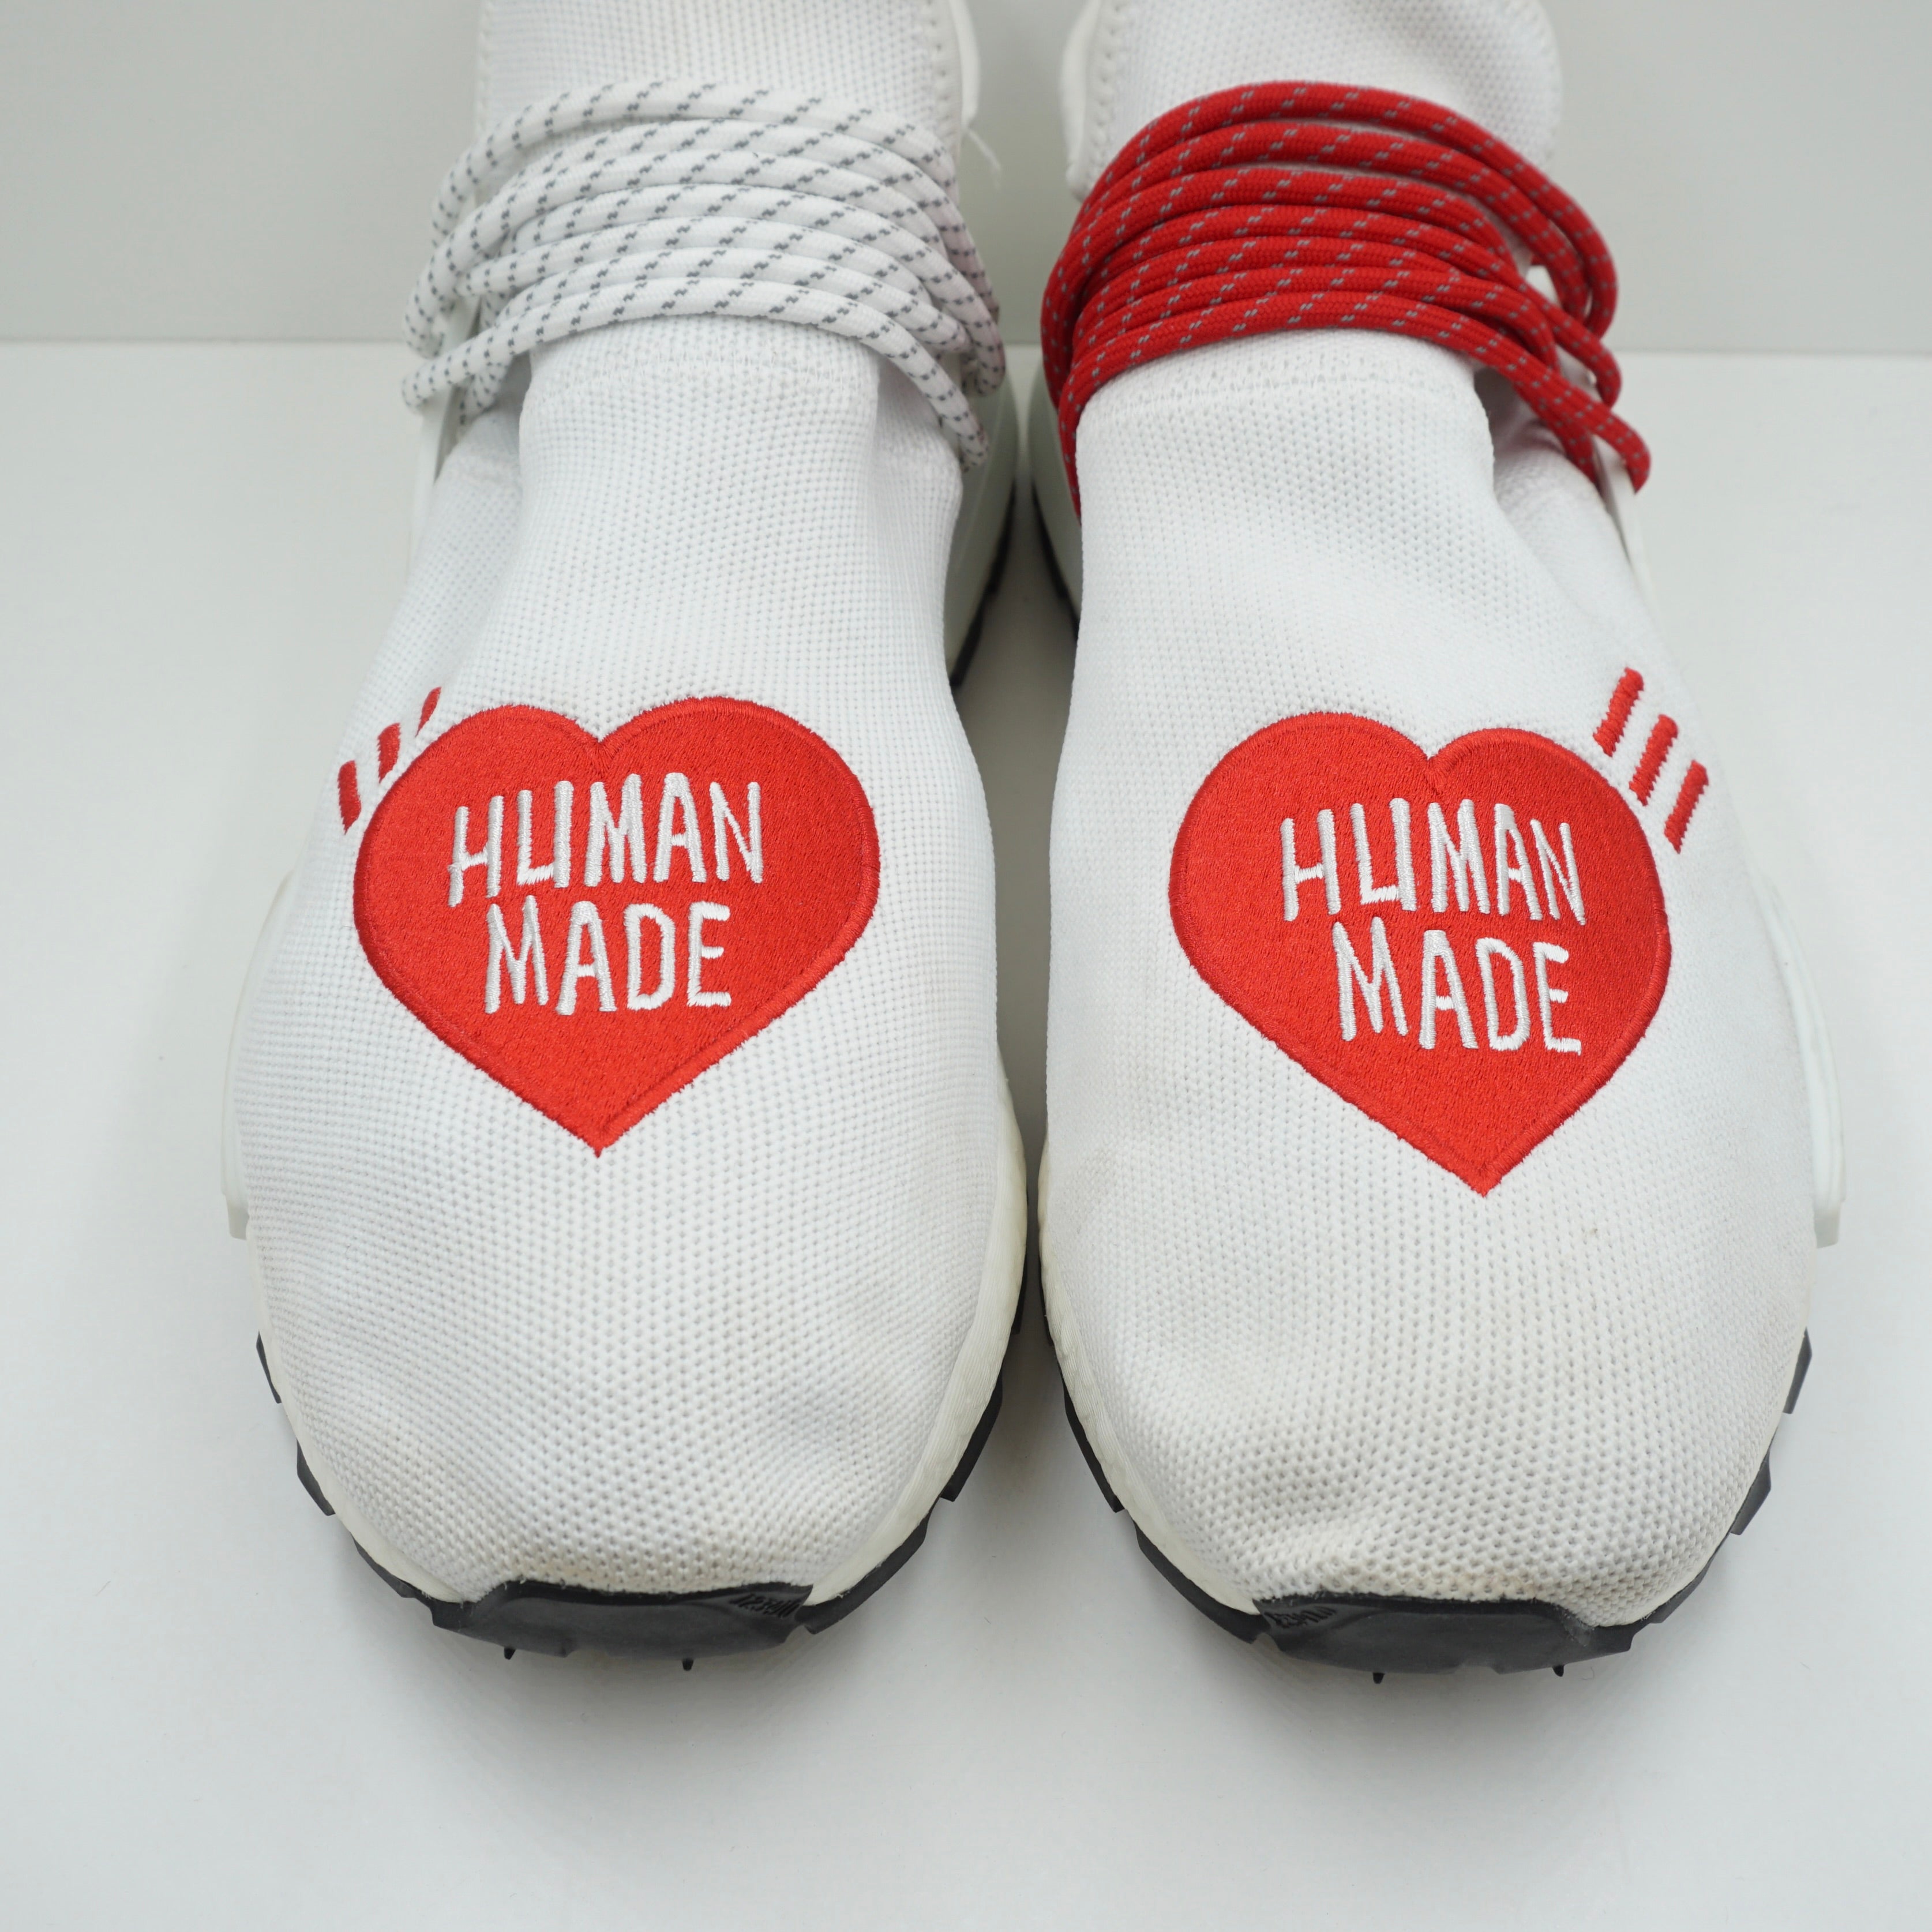 Adidas NMD HU Pharrell Human Made White Red